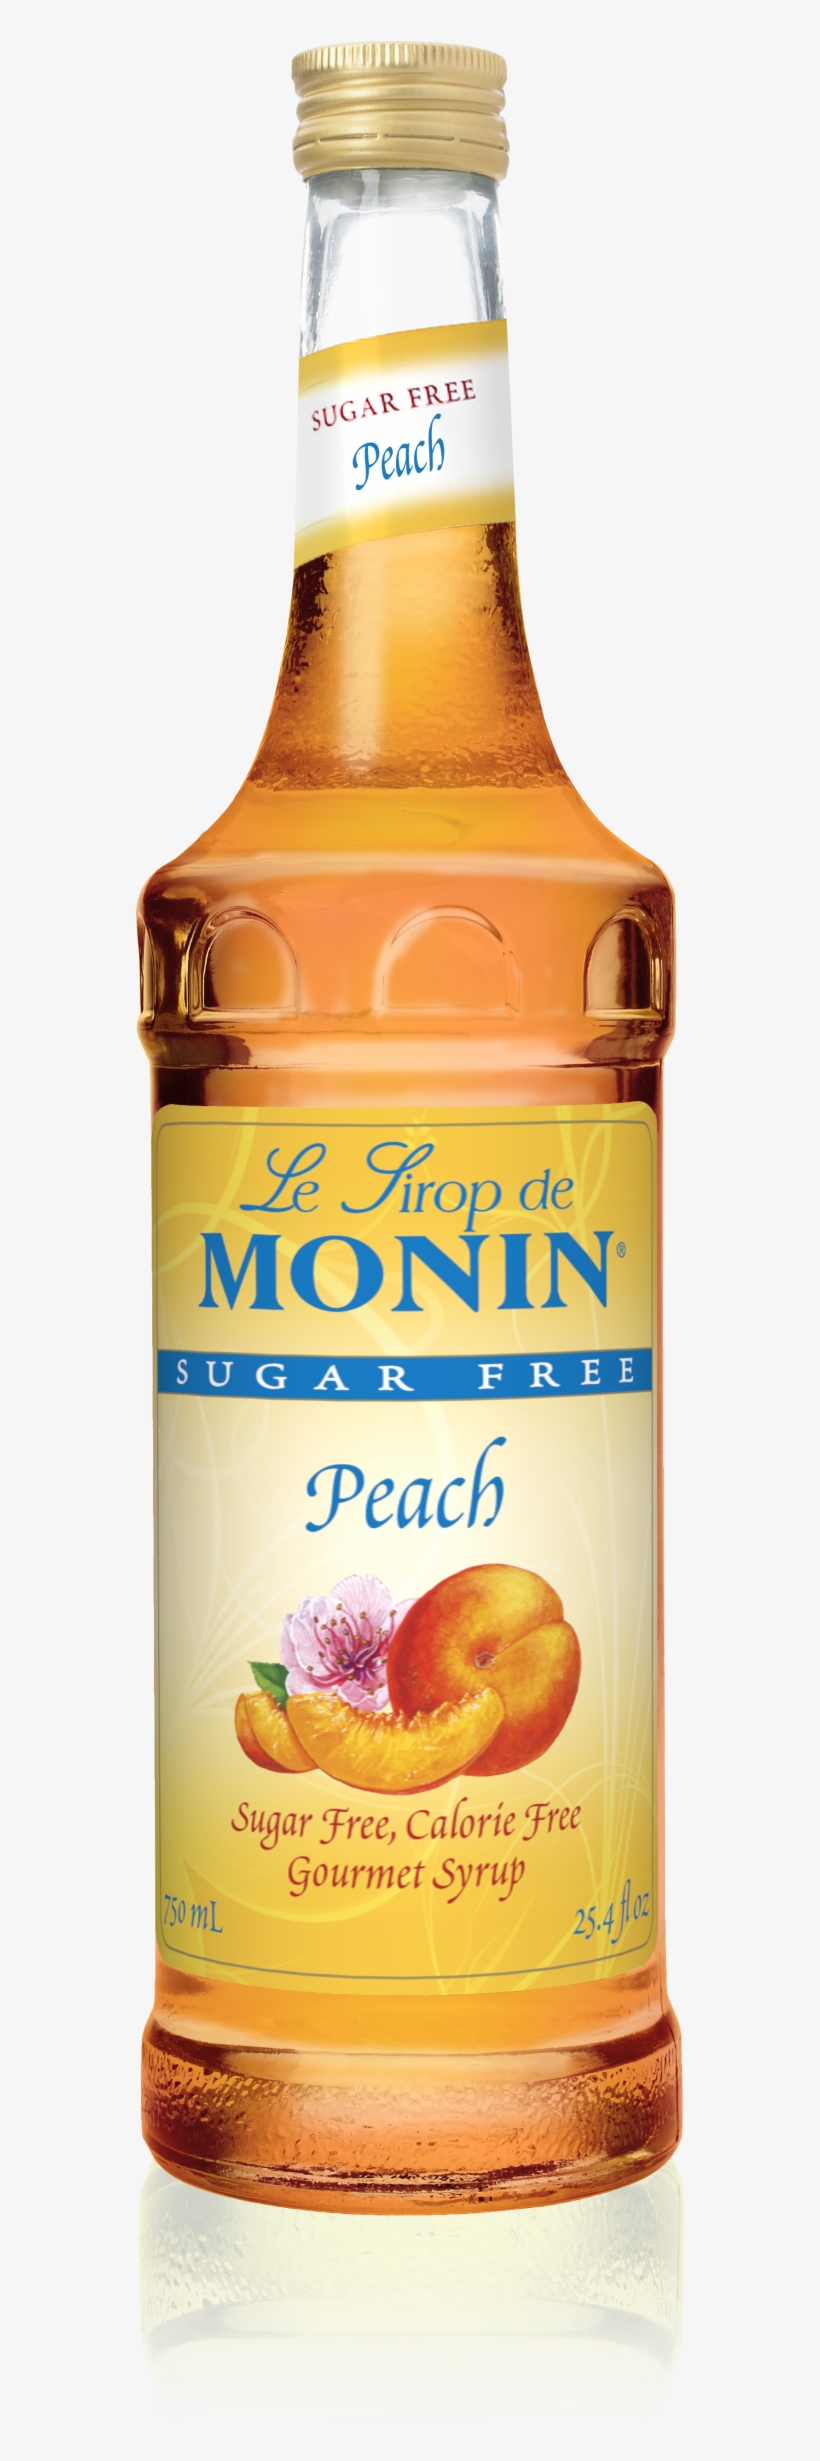 750 Ml Sugar Free Peach Syrup - Monin 750 Ml Sugar Free Peach Flavoring / Fruit Syrup, transparent png #1761459